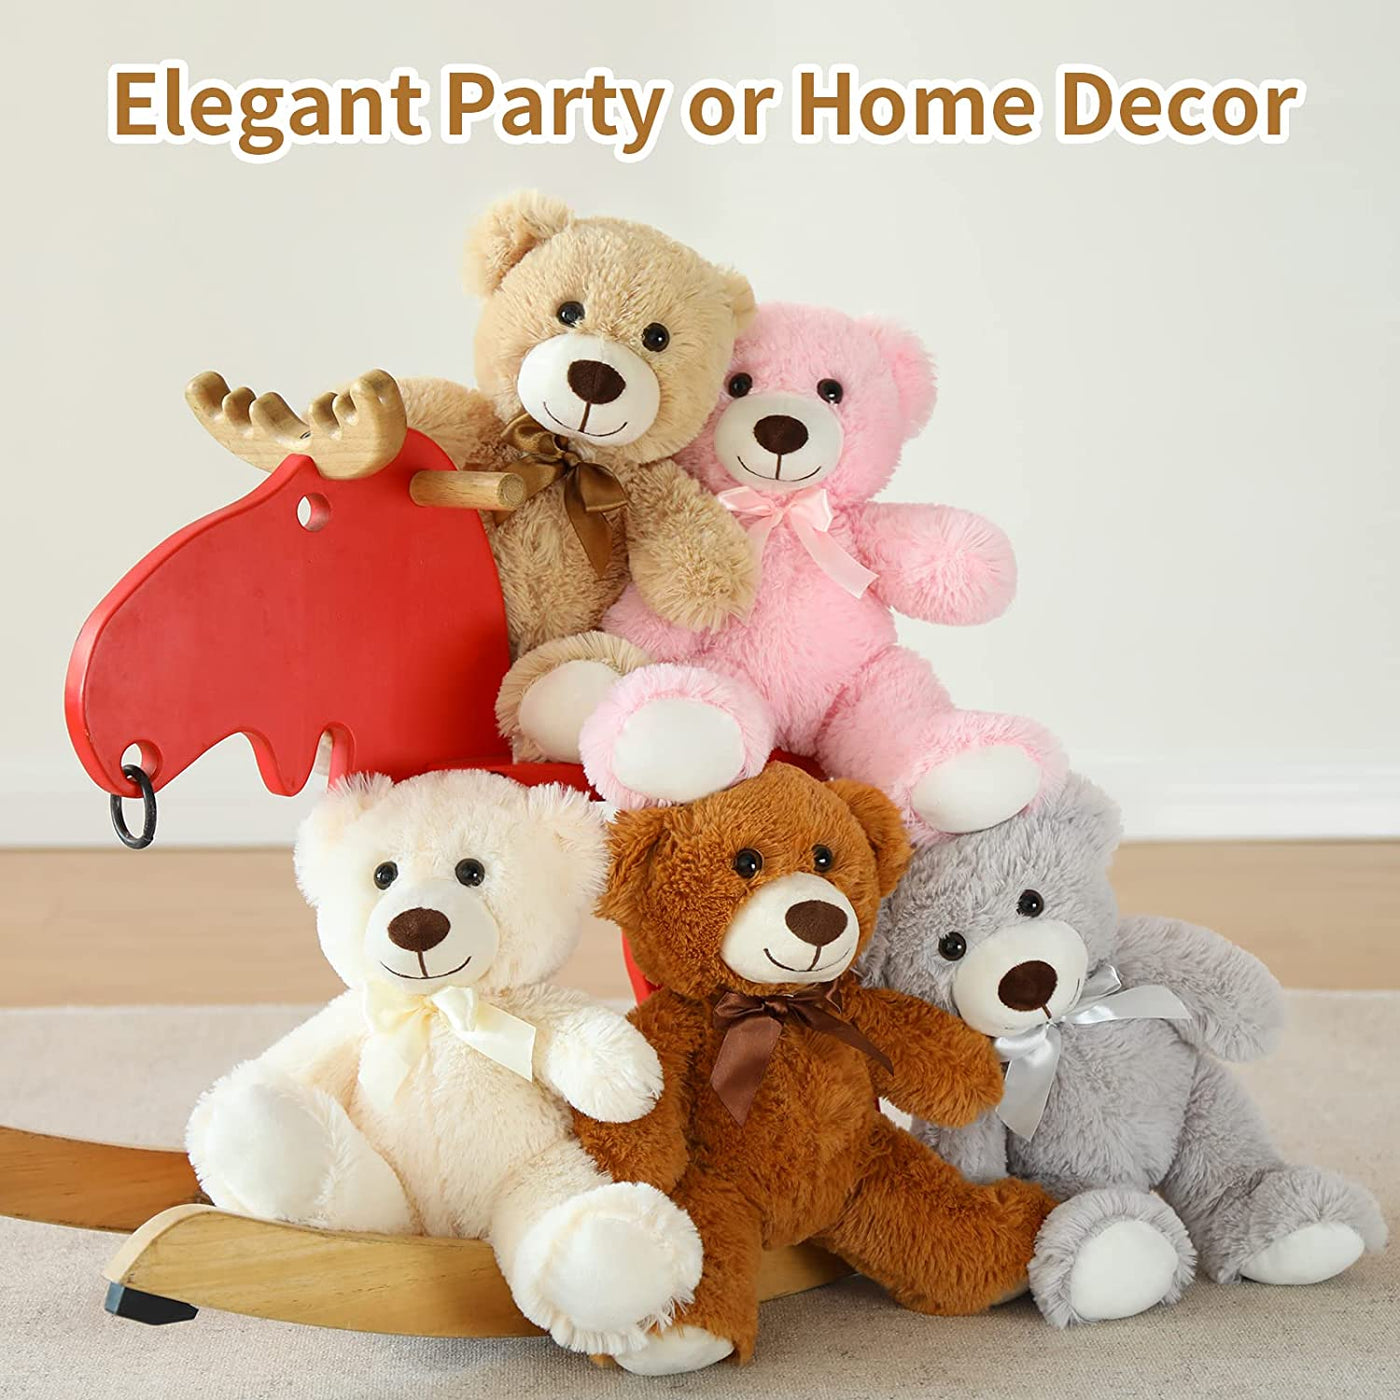 5 Piece Teddy Bears Stuffed Animal Toys, 14 Inches - MorisMos Stuffed Animals